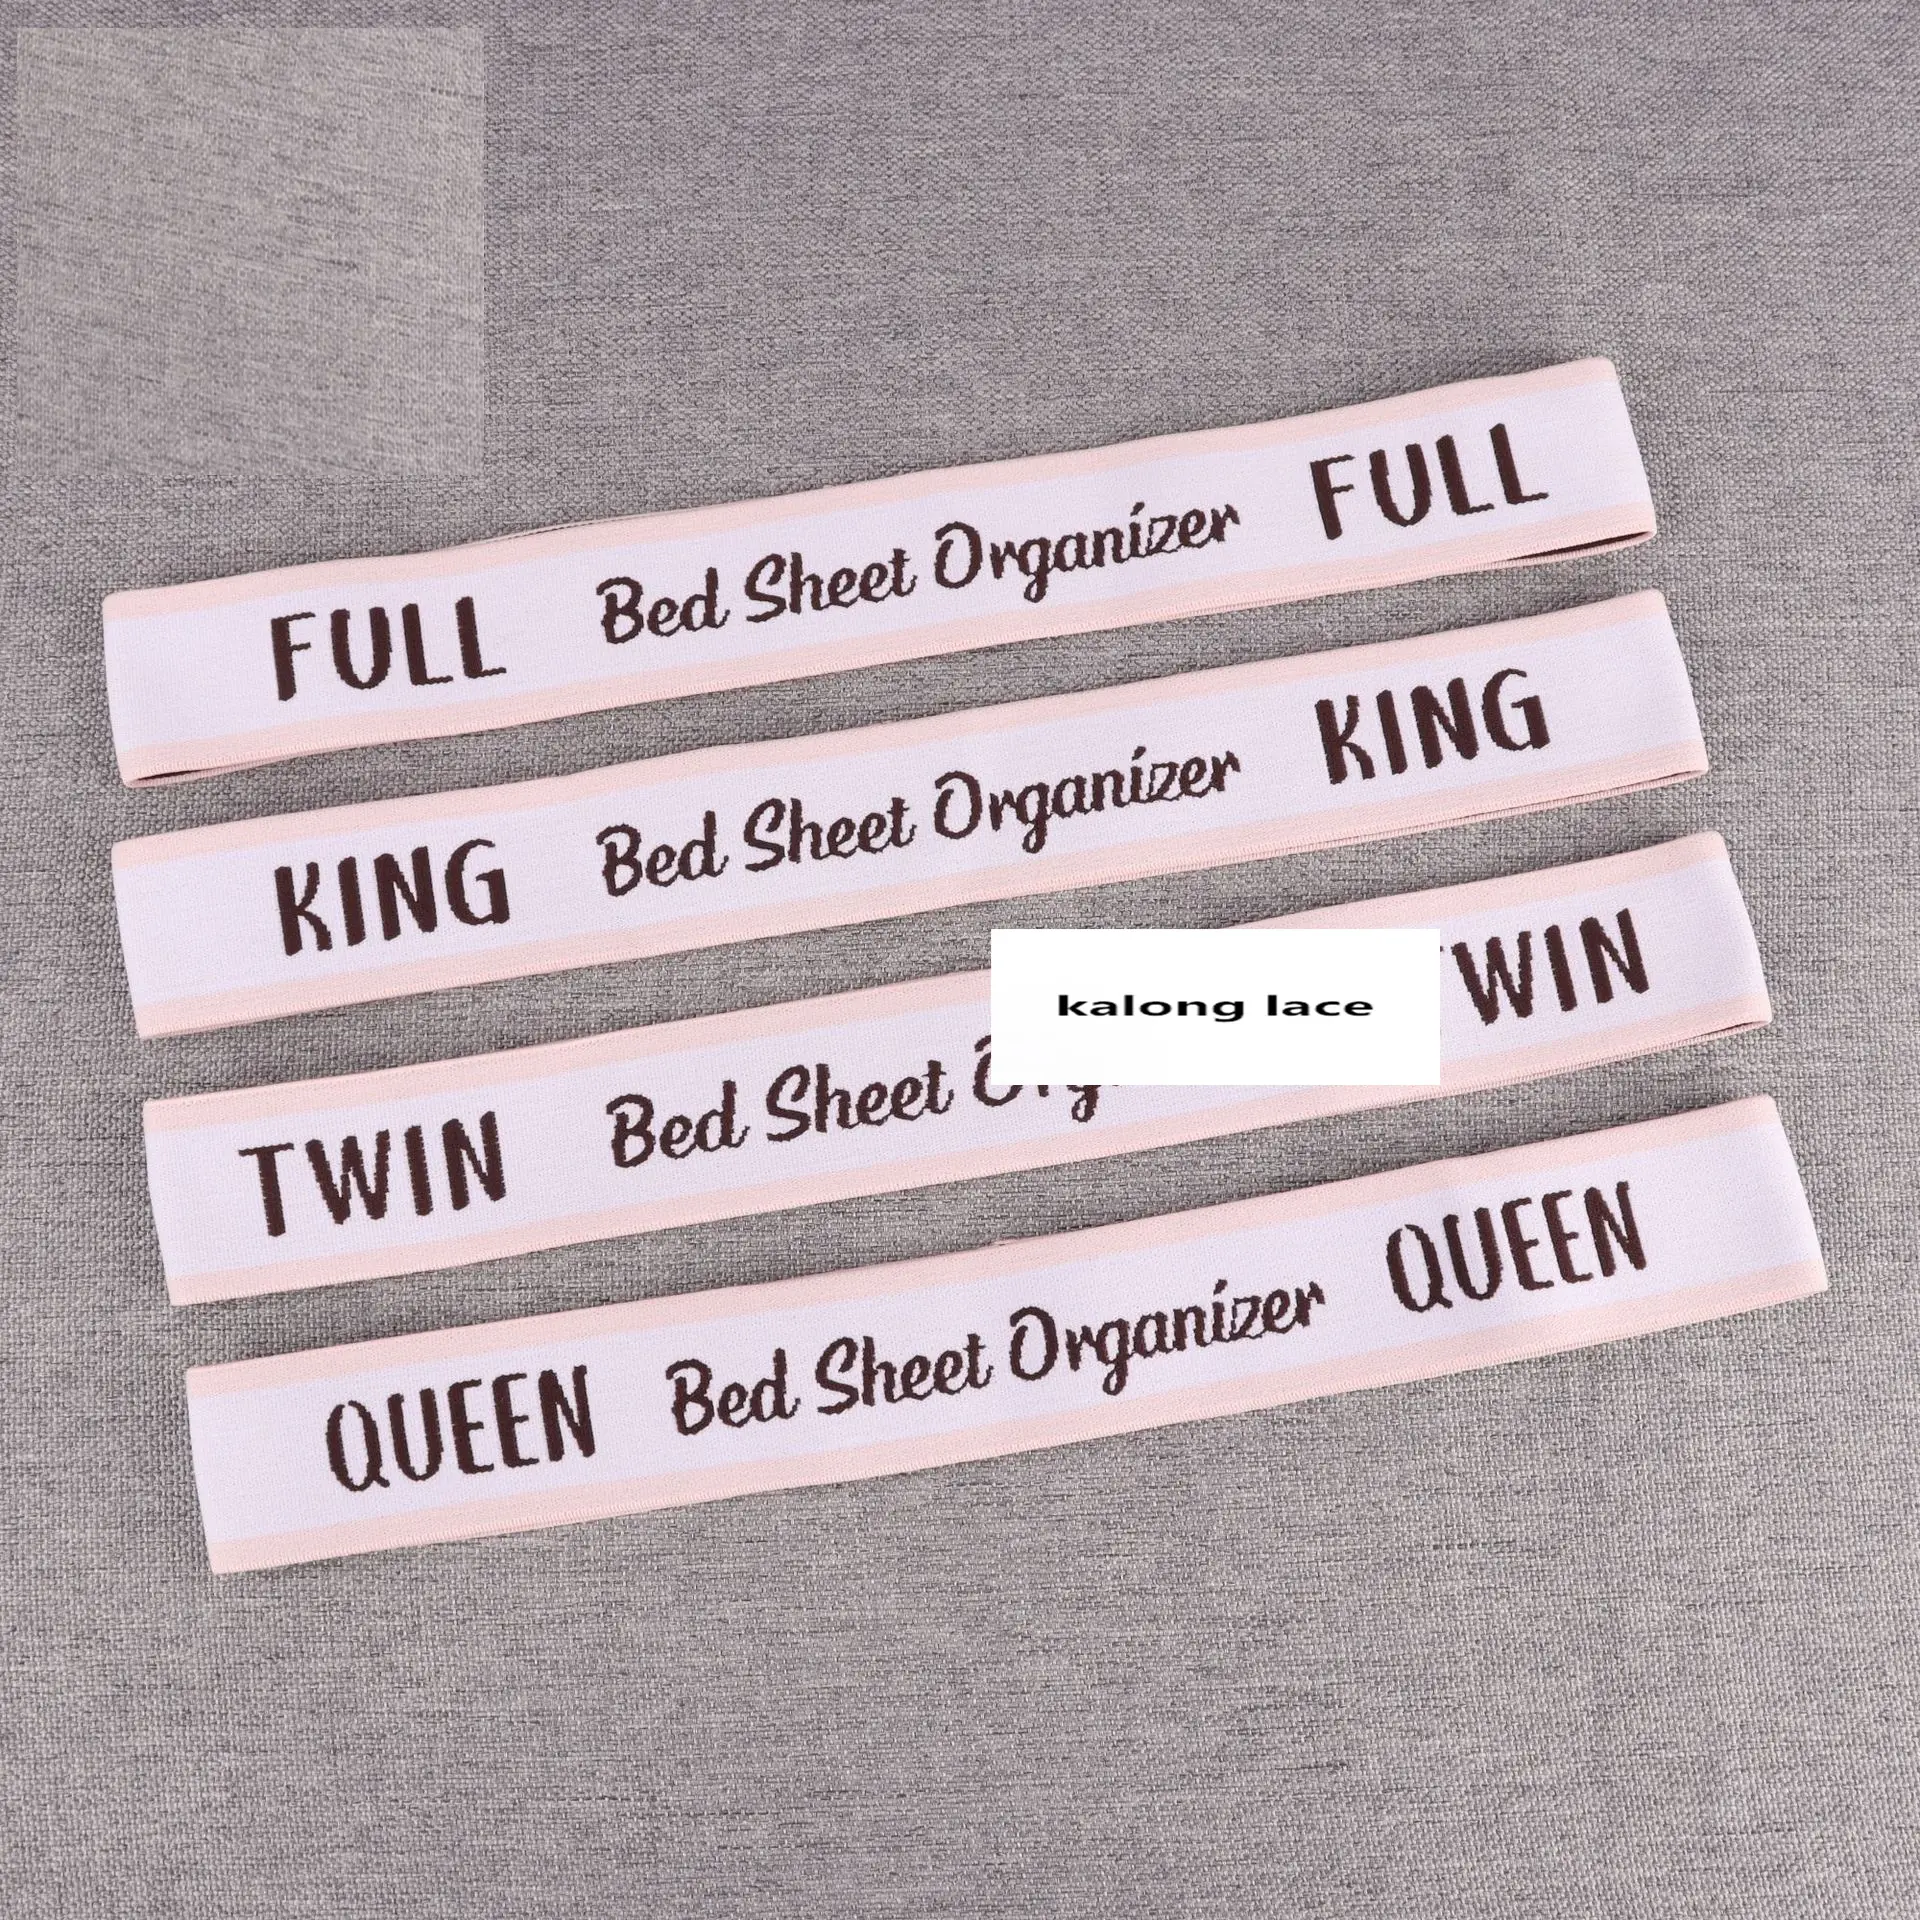 Polyester Queen full twin king grosgrain Webbing Nylon elastic band ribbon for clothing storage belt bed sheet organizer